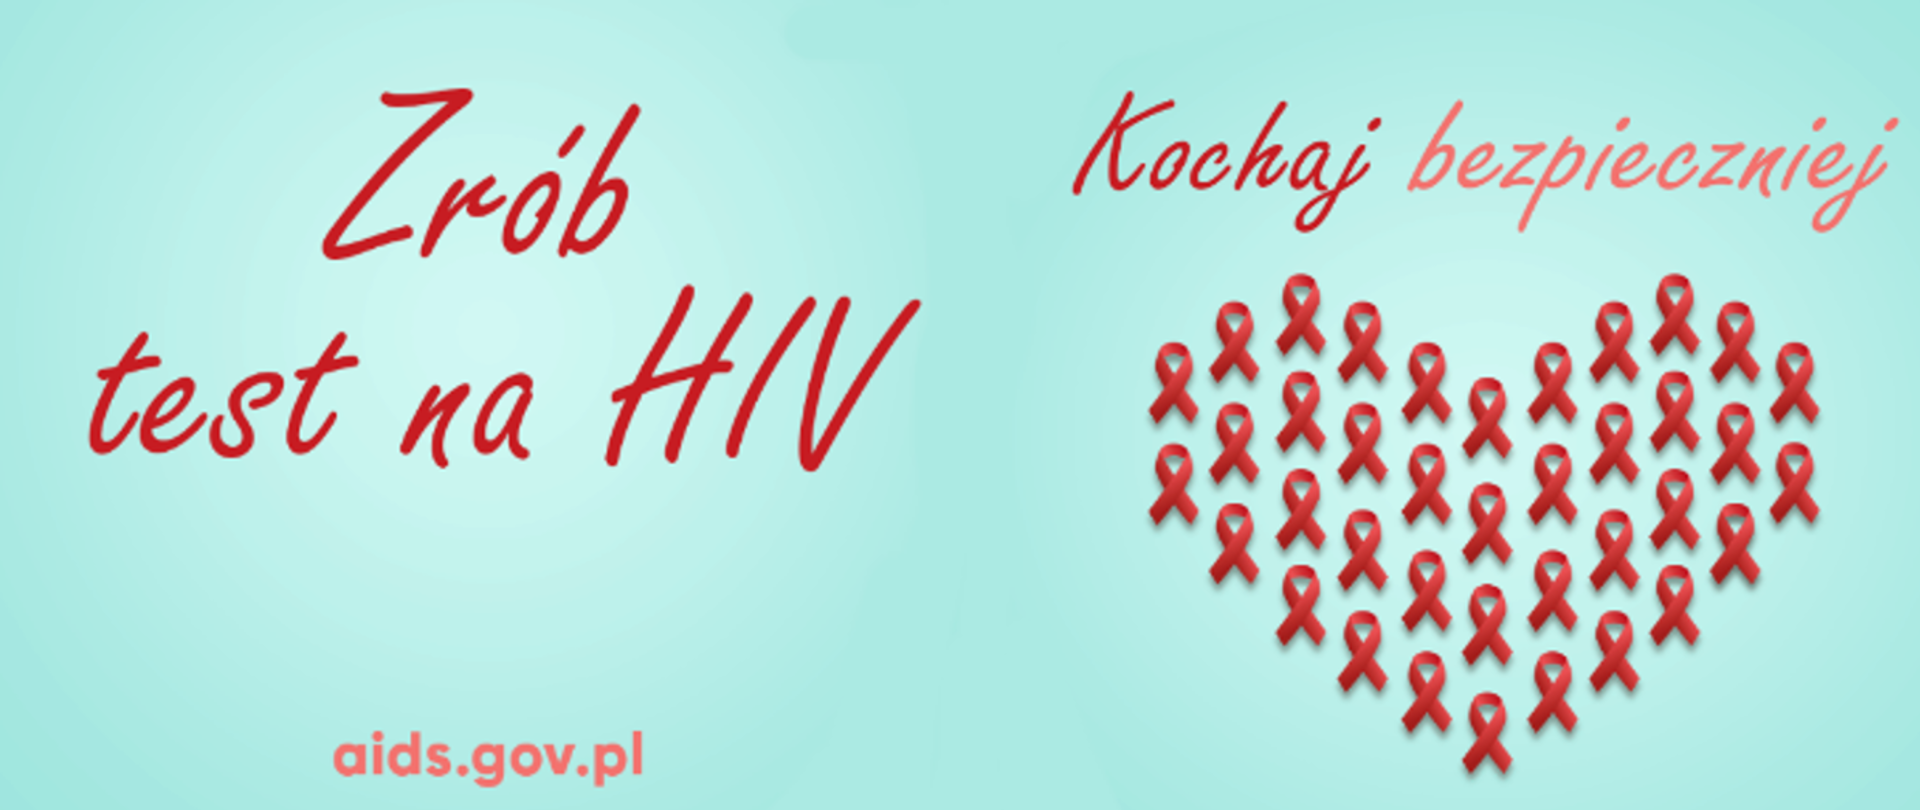 kochaj bezpieczniej zrób test na hiv aids.gov.pl